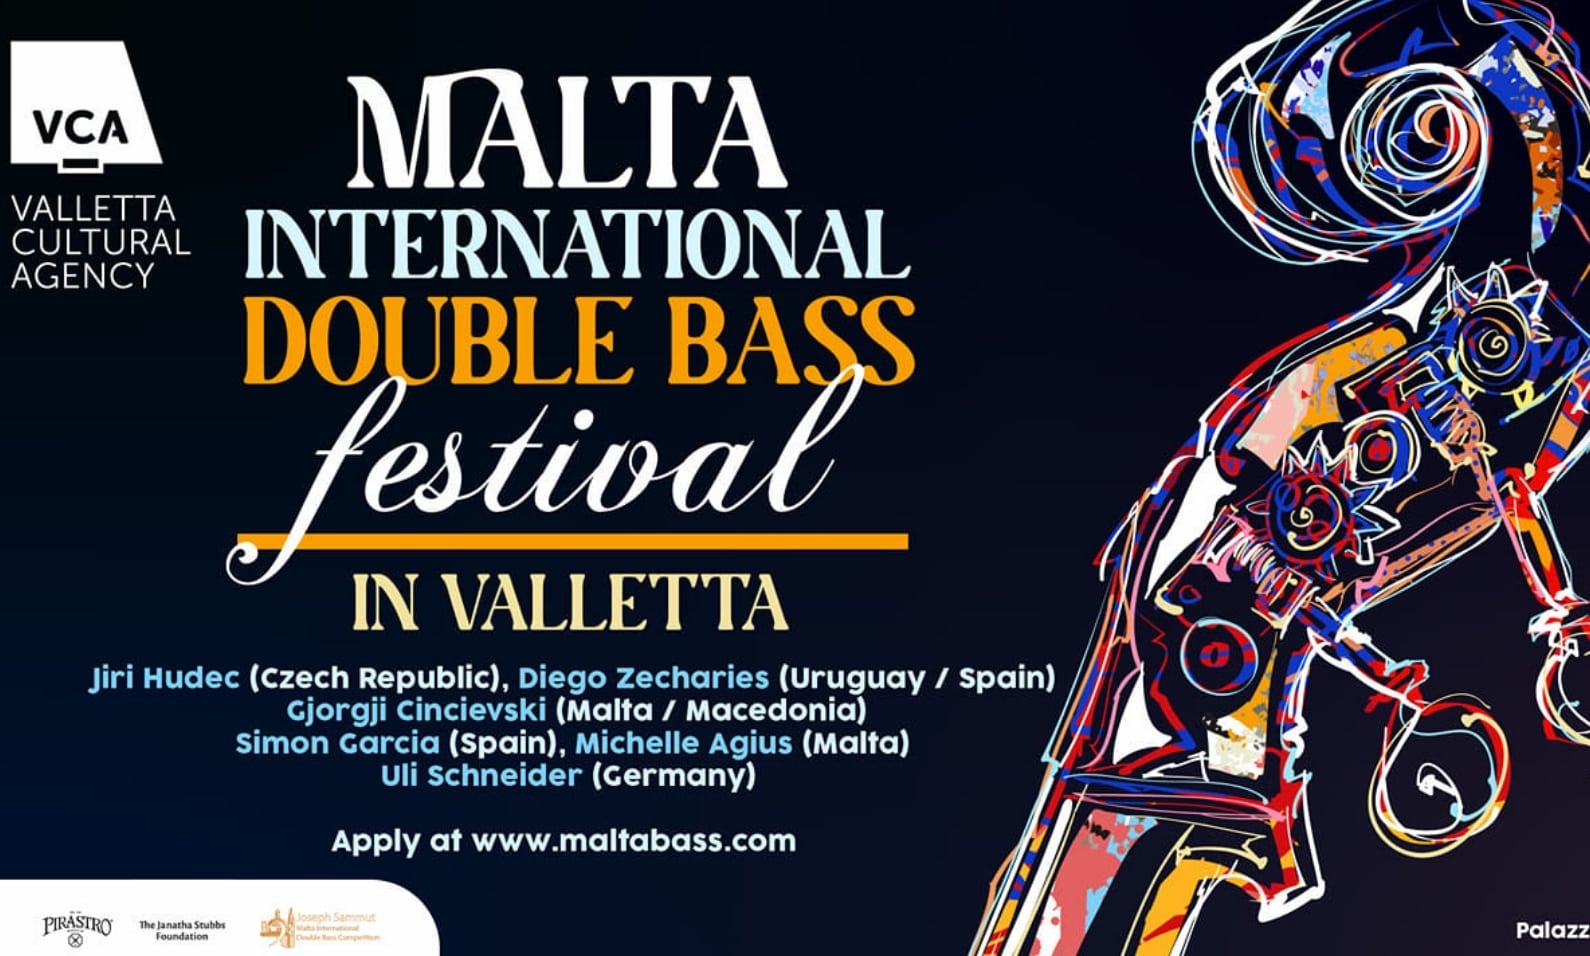 Malta International Double Bass Festival, Valletta